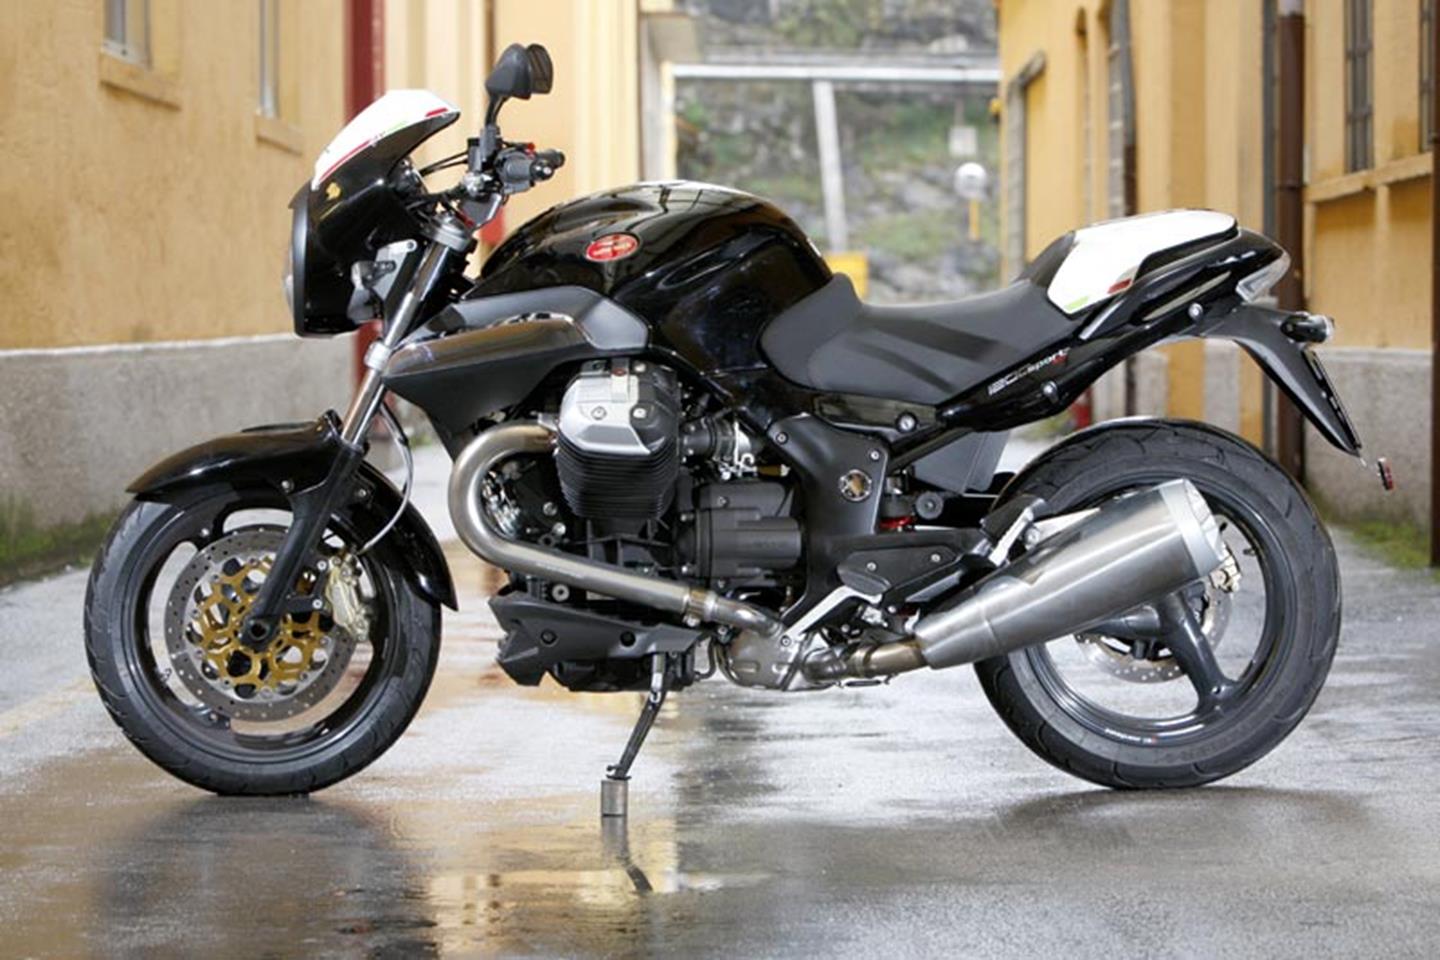 Дорожные байки. Moto Guzzi Breva 1200. Мото Гуцци 1200 спорт. Guzzi мотоцикл 1200. Moto Guzzi Breva 1200 Sport 0-100 разгон.